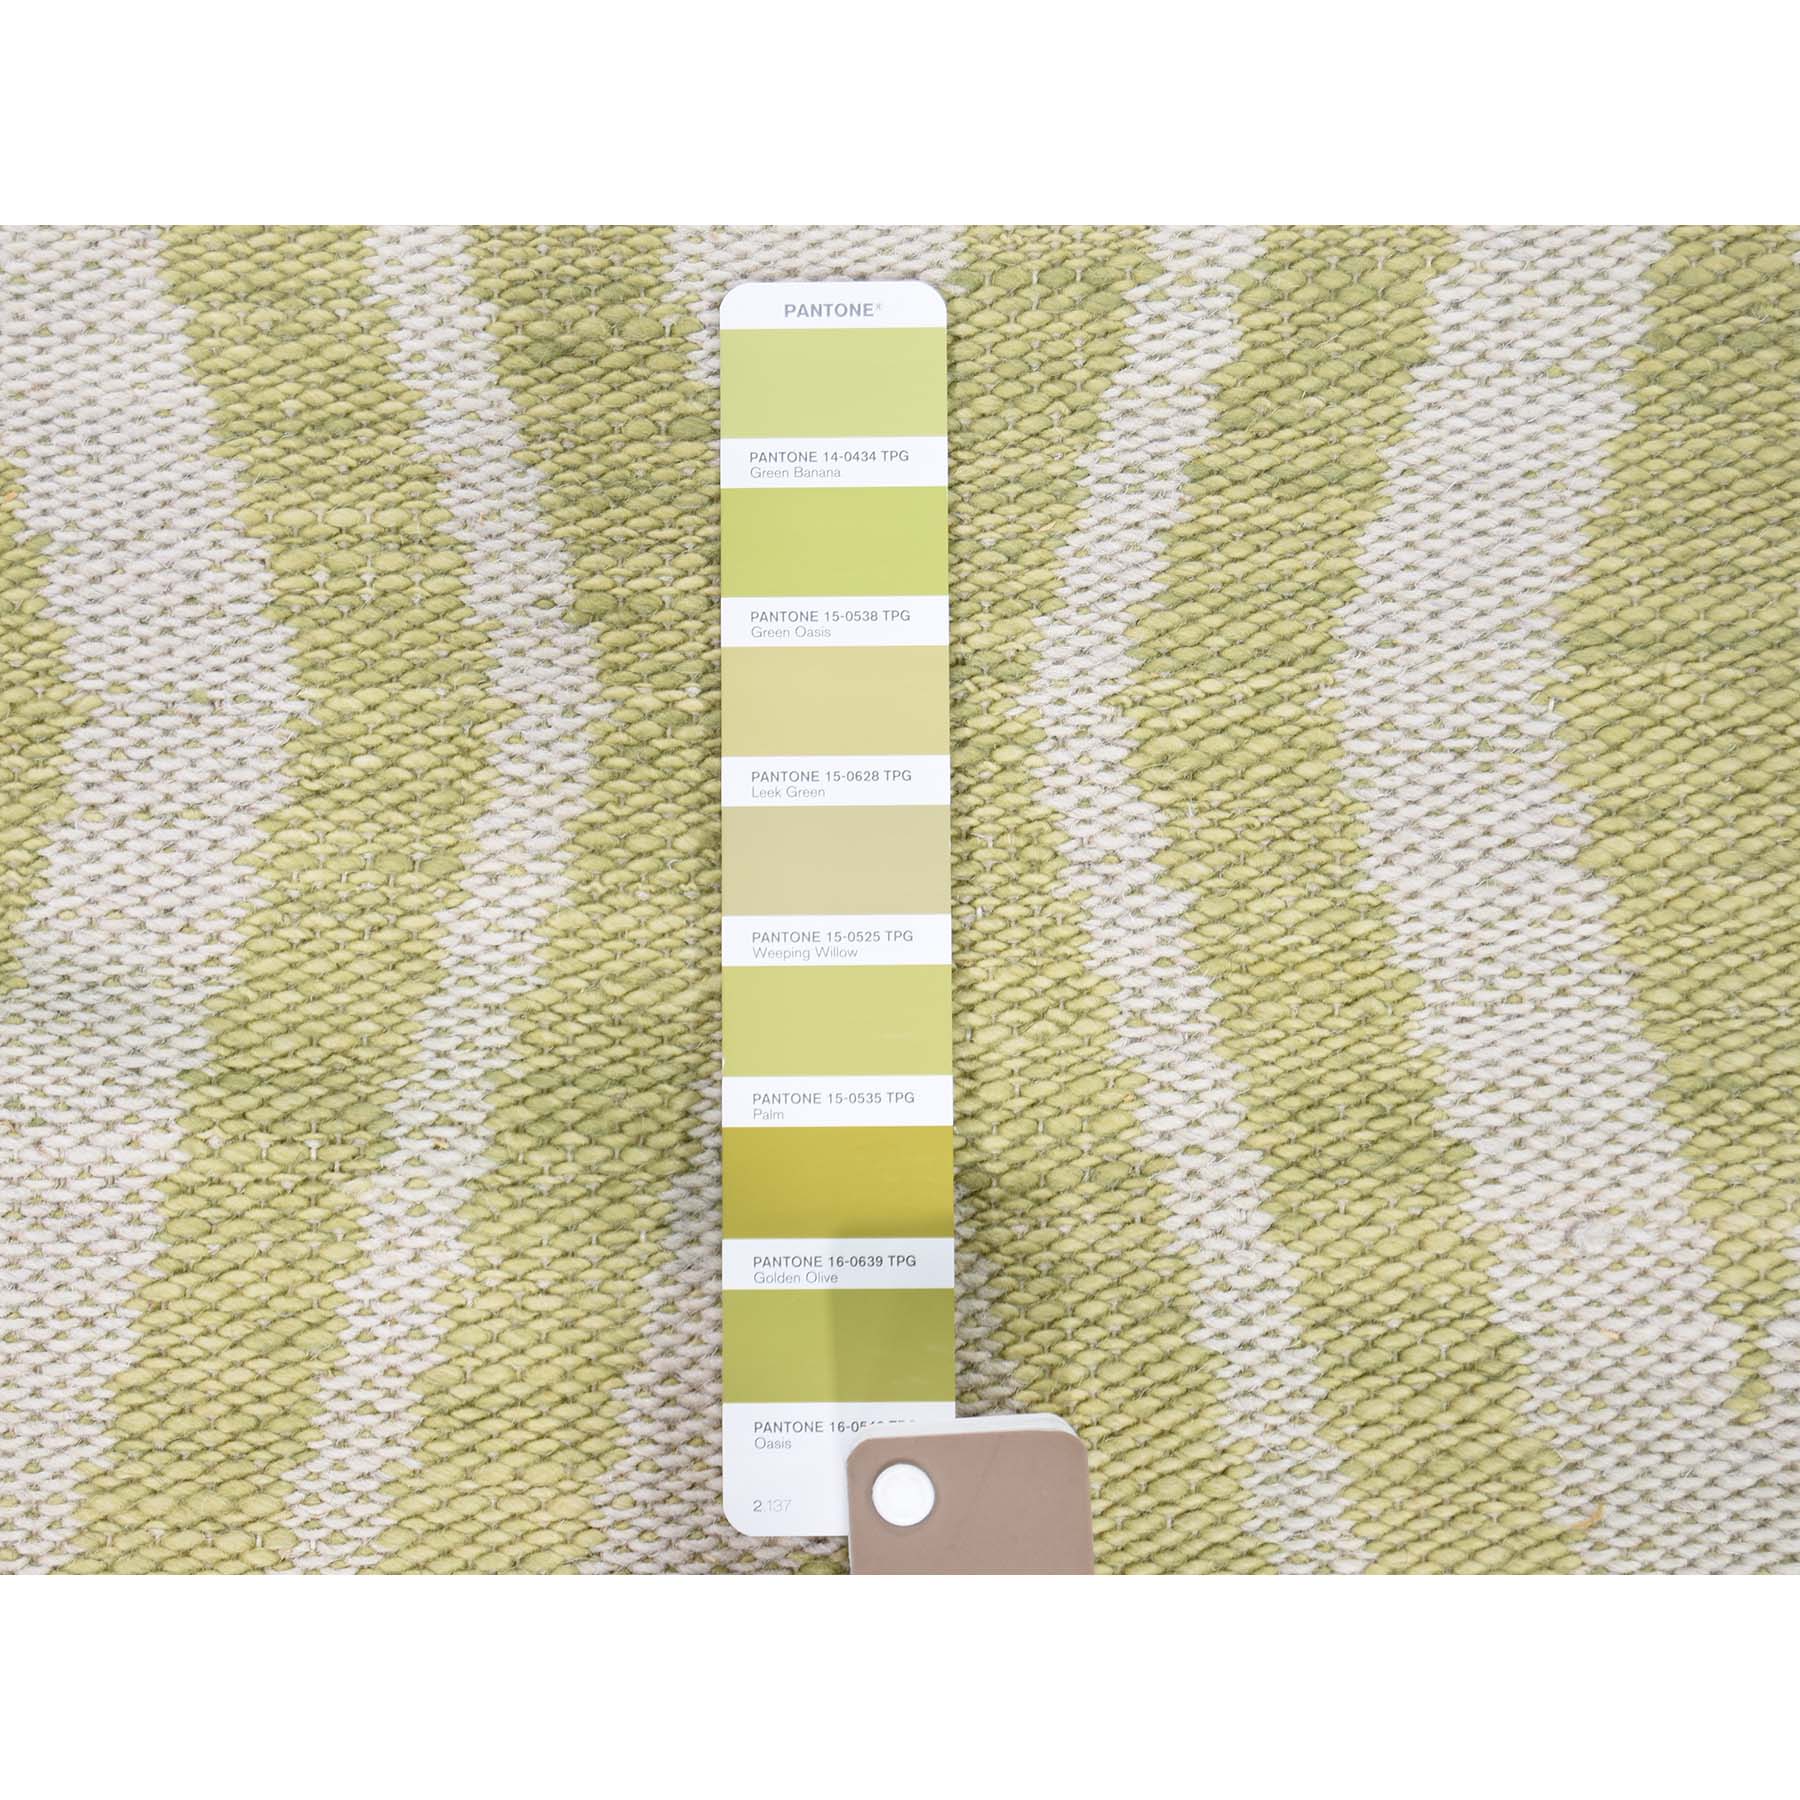 2-x3- Light Green Hand Woven Pure Wool Reversible Kilim Oriental Rug 